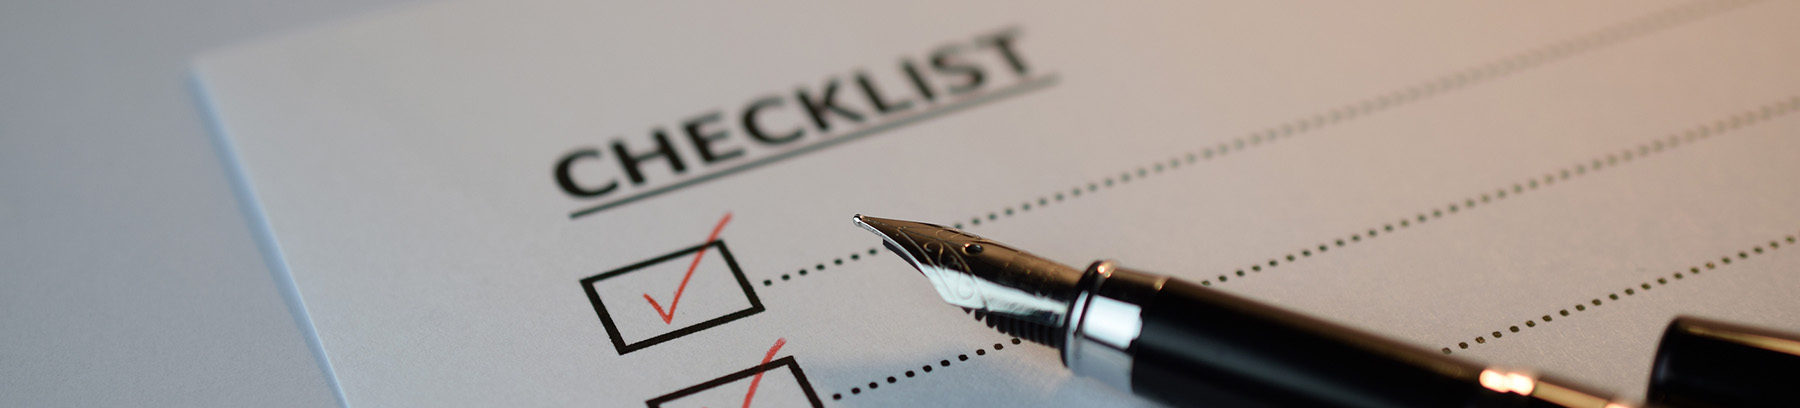 Checklist - paper checklist with pen